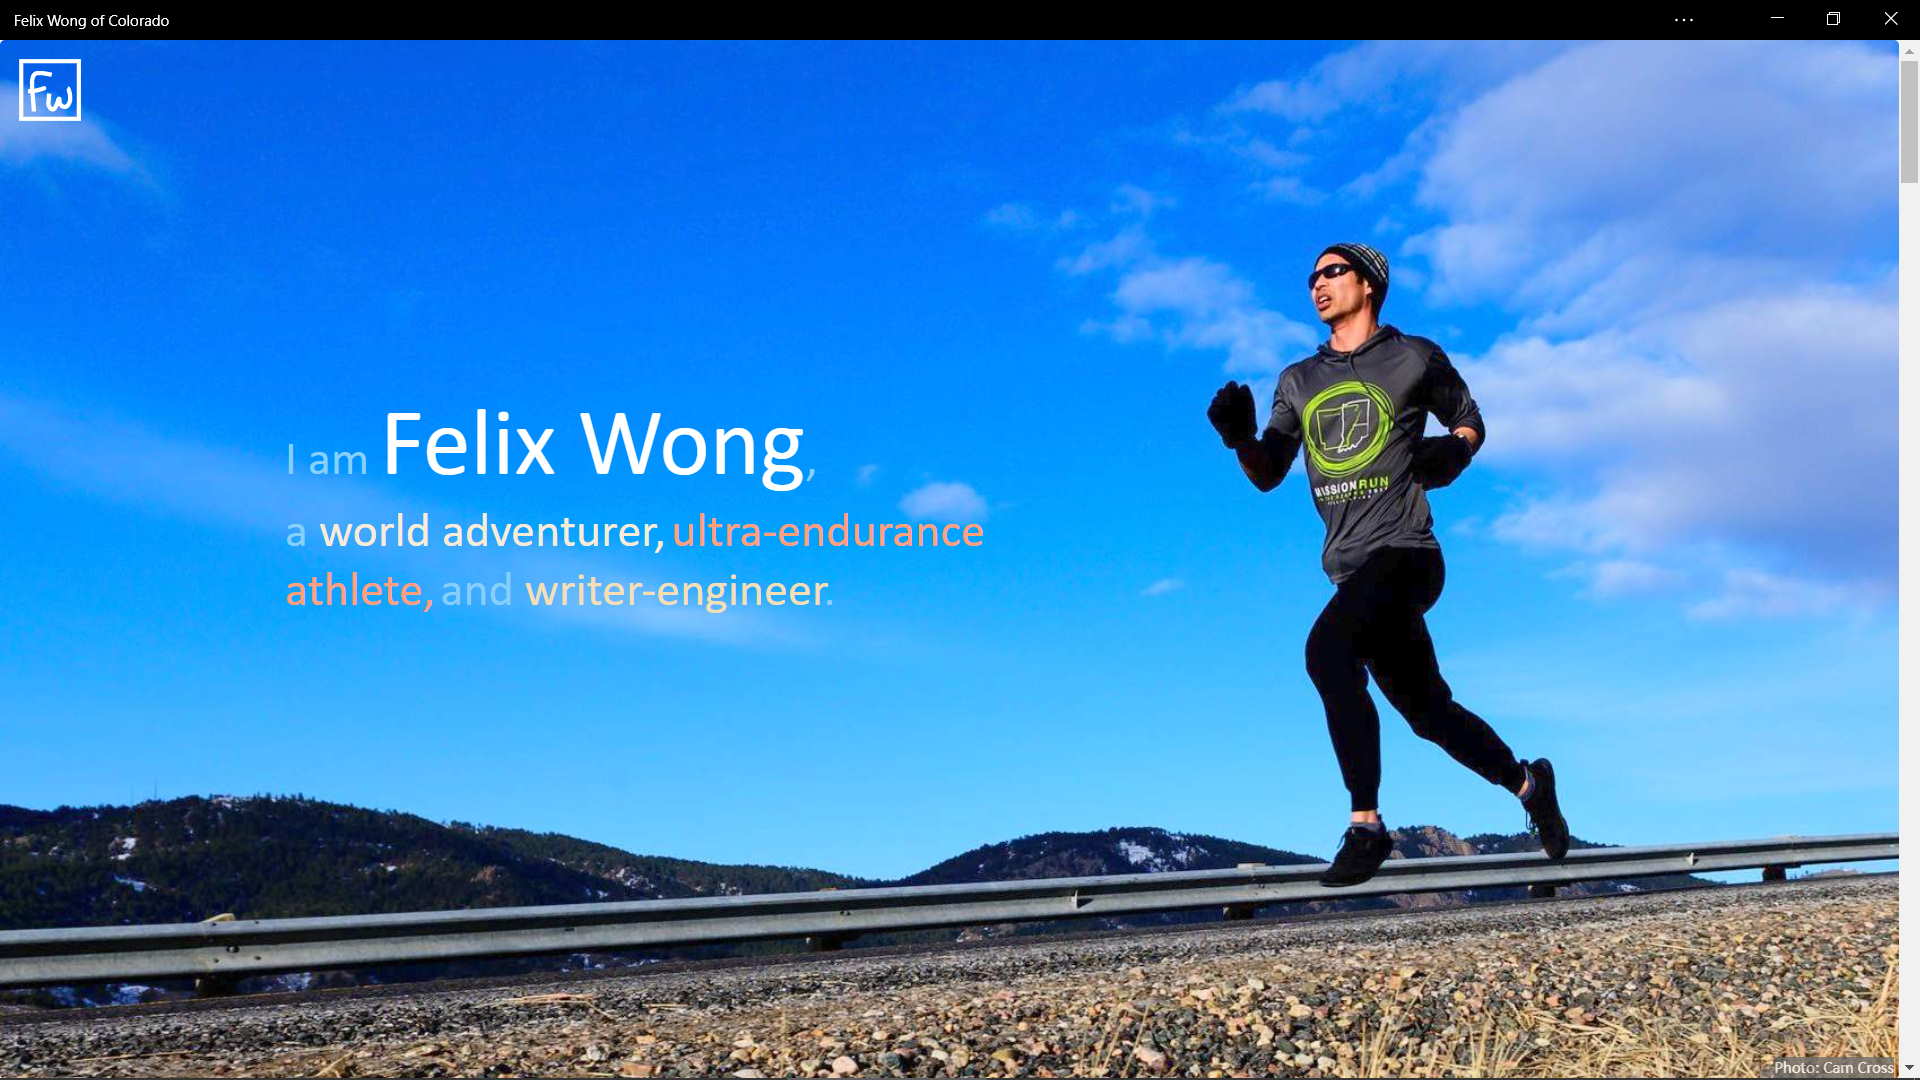 home page of felixwong.com showing Felix Wong running and says I am Felix Wong, a world adventurer, ultra-endurance athlete and writer-engineer